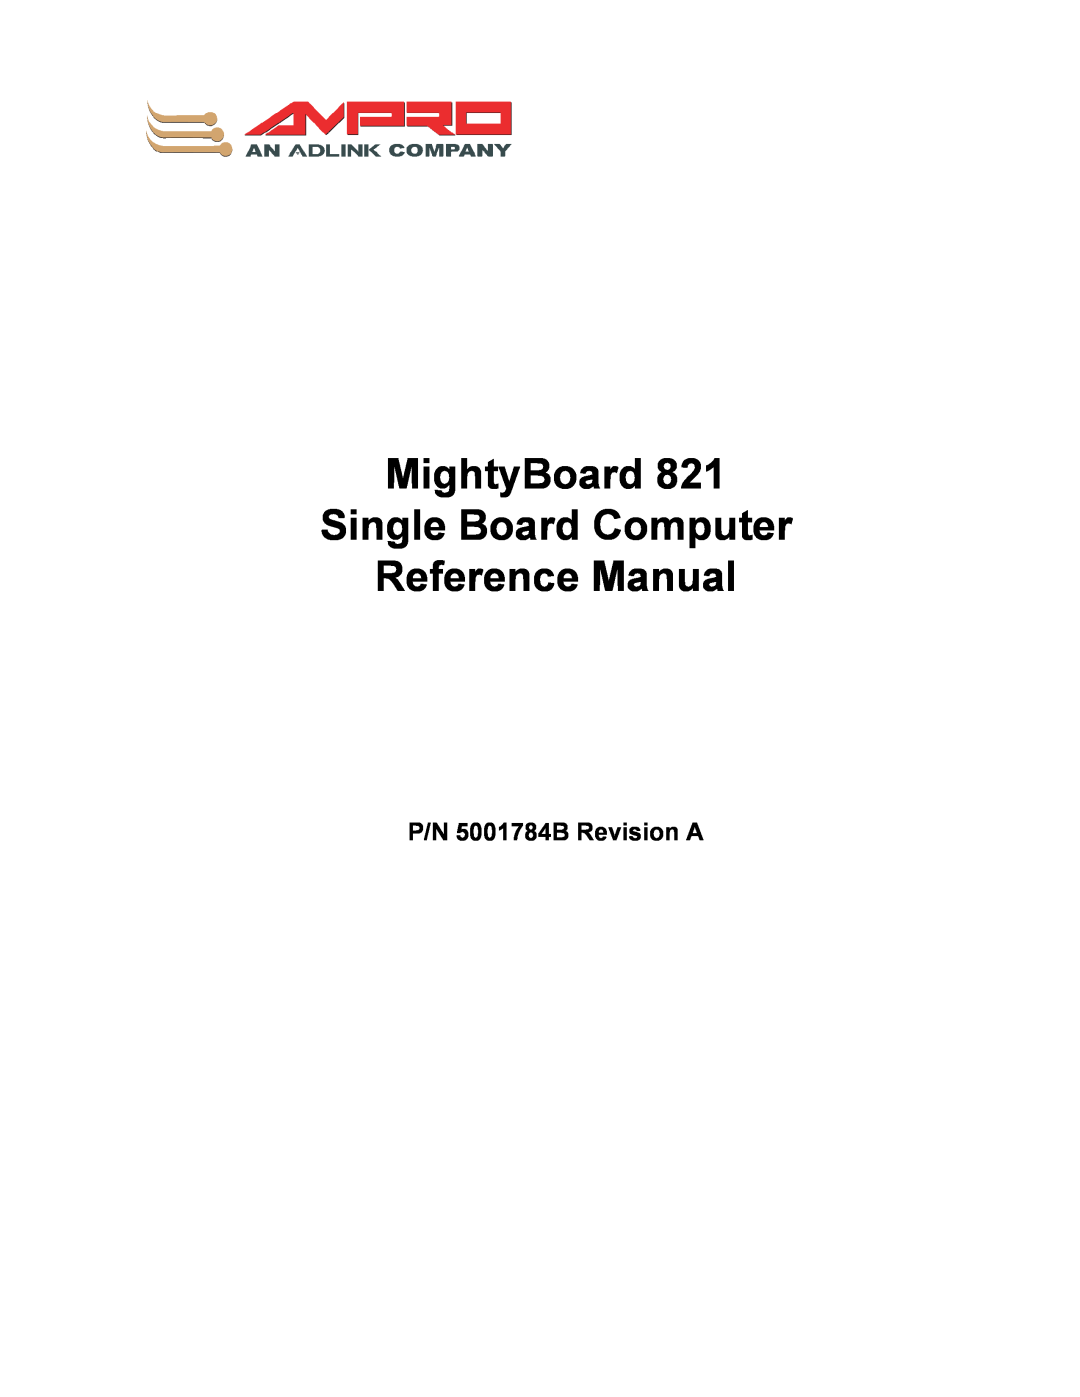 Ampro Corporation MightyBoard 821 manual P/N 5001784B Revision A, MightyBoard Single Board Computer Reference Manual 